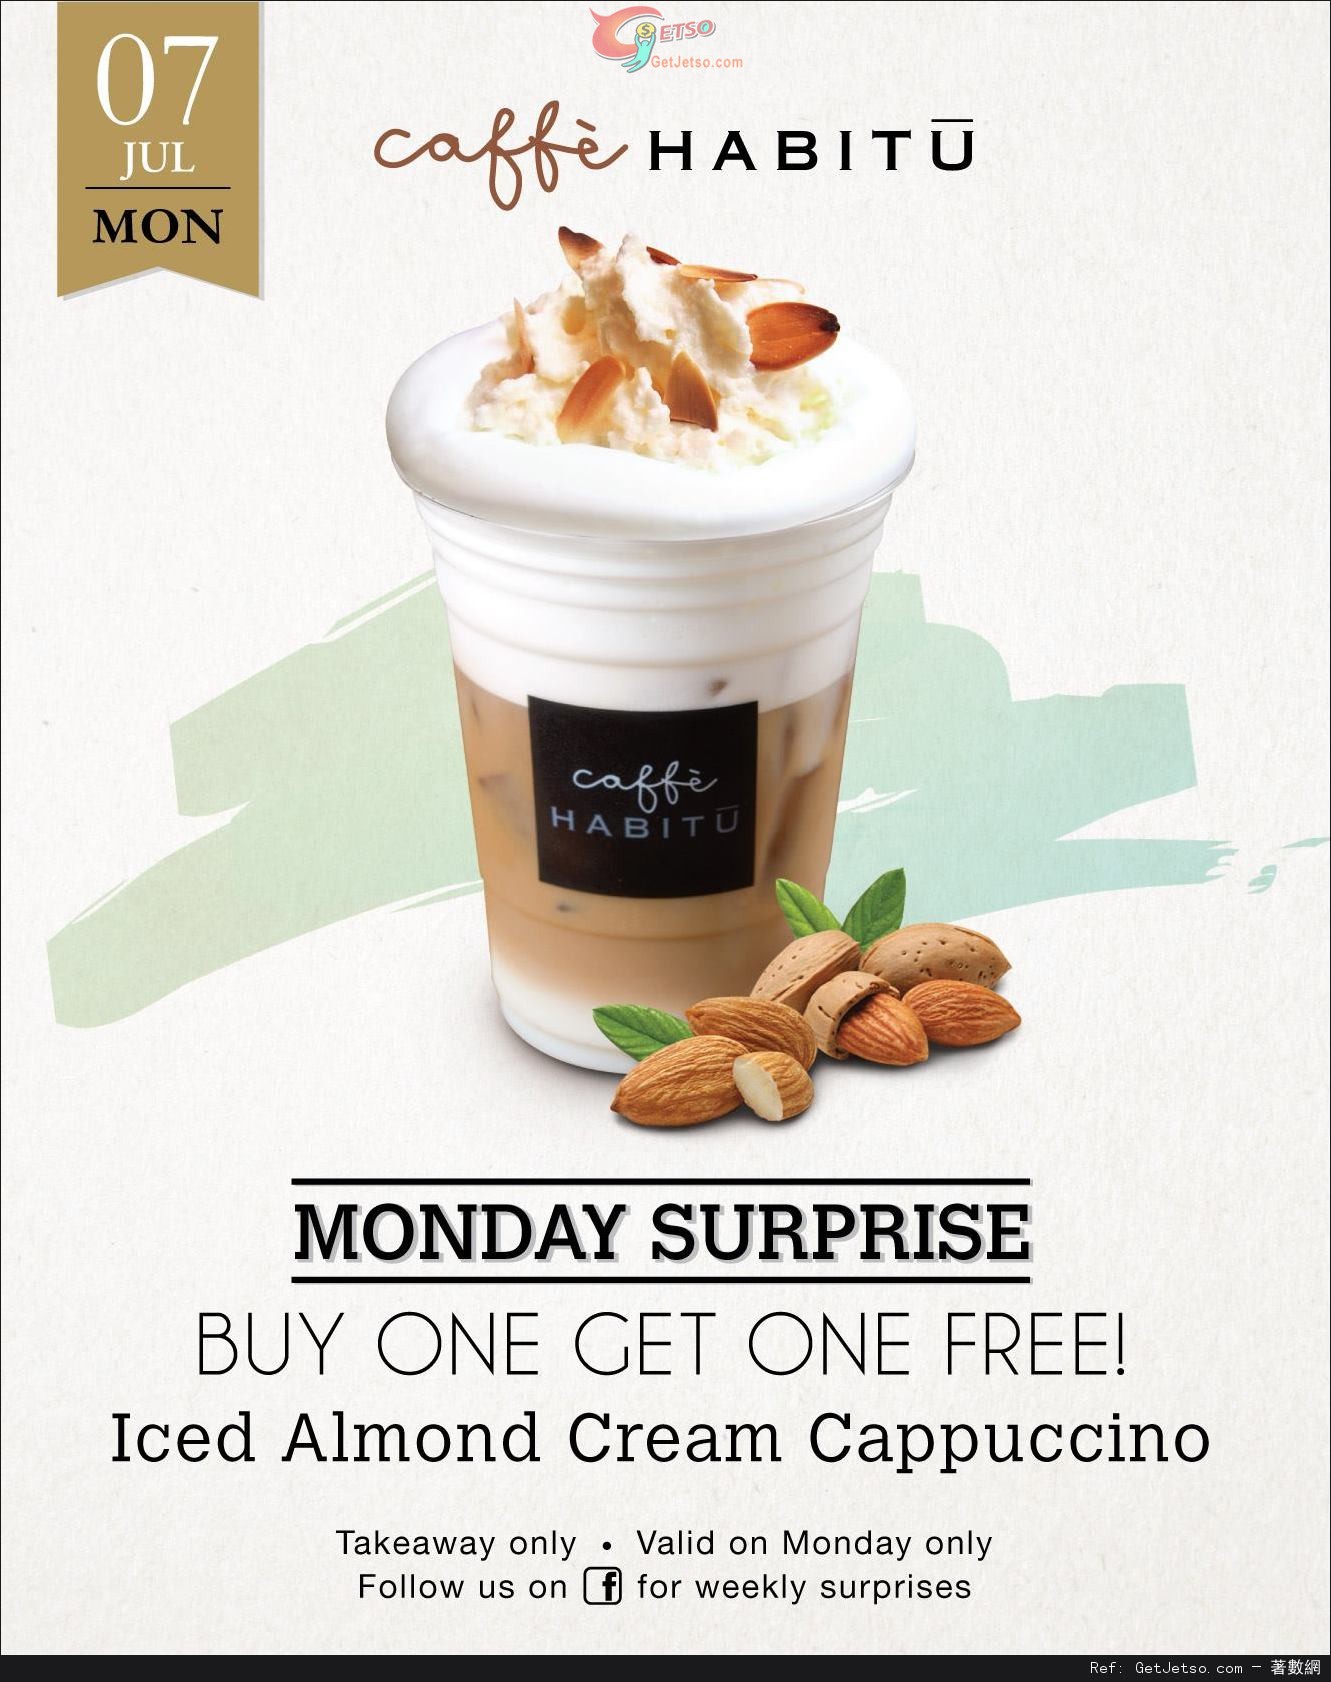 Caffe HABITU Iced Almond Cream Cappuccino 買1送1優惠(14年7月7日)圖片1